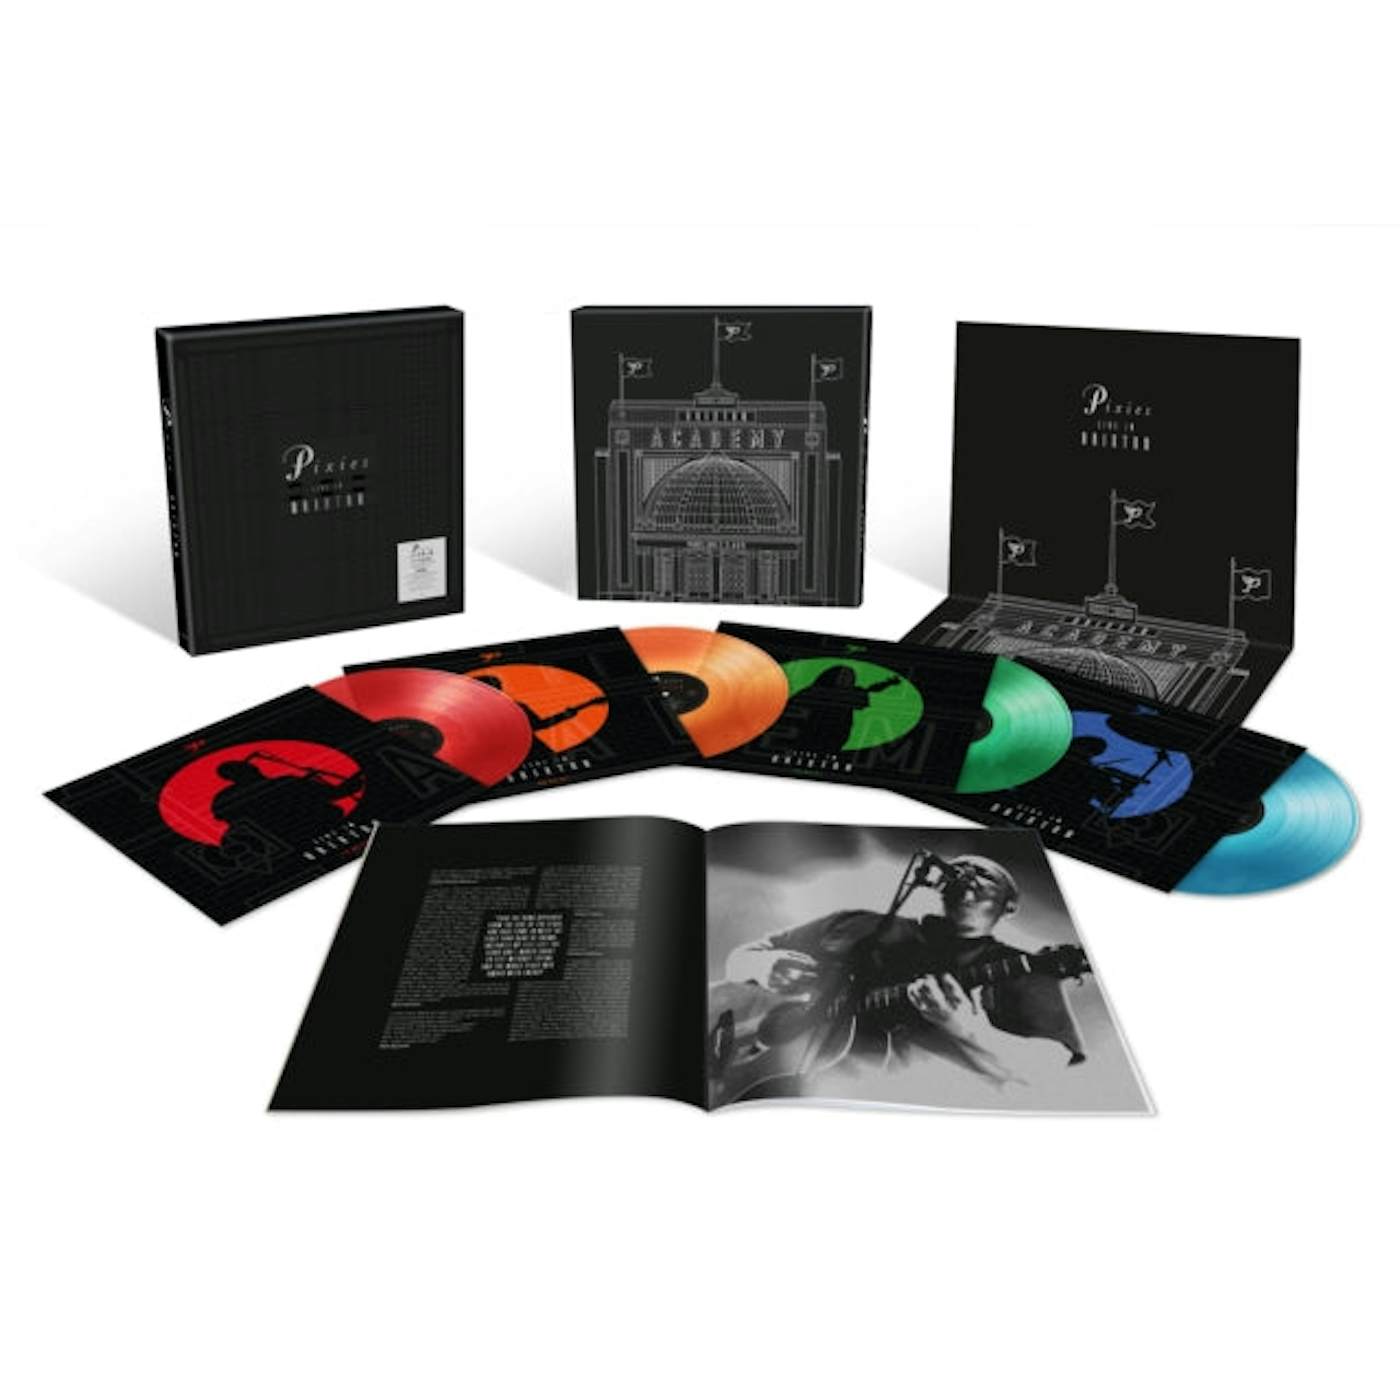 Pixies LP Vinyl Record - Live In Brixton (Red/Orange/Green/Blue Translucent Vinyl)